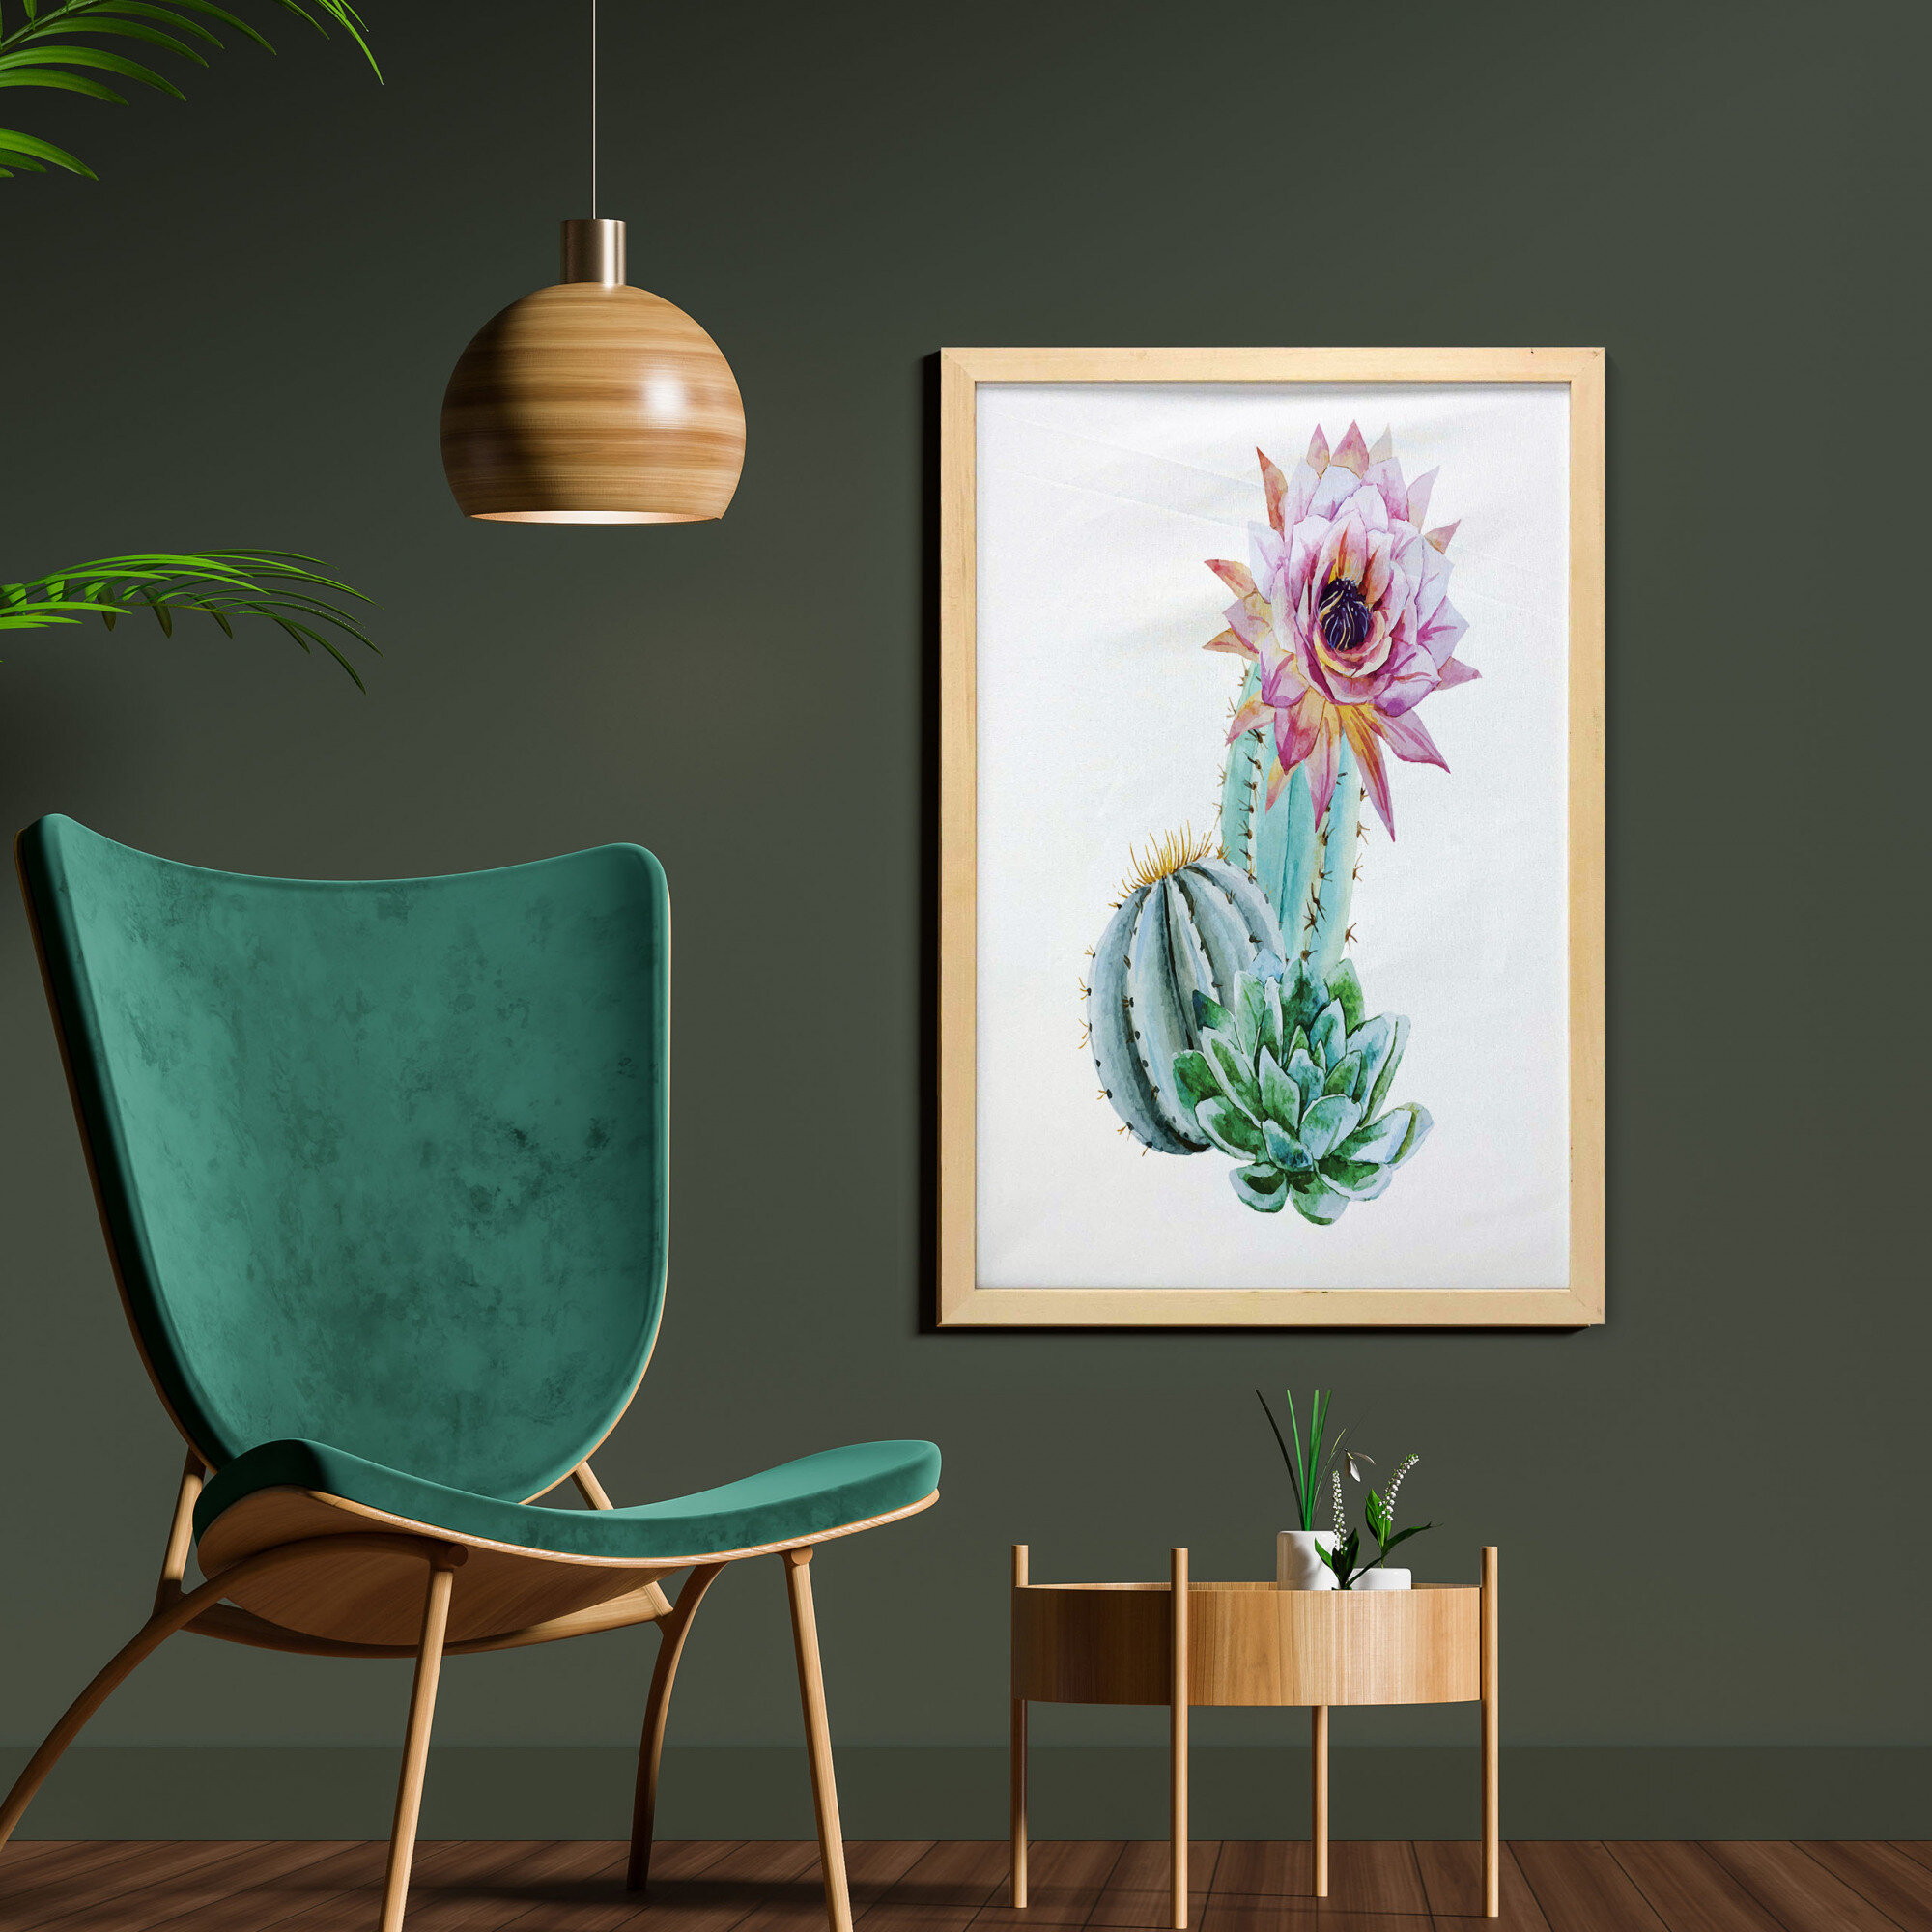 Bless international Cactus Spikes Flower In Hot Mexican Desert Sand  Botanical Natural Framed On Fabric Print